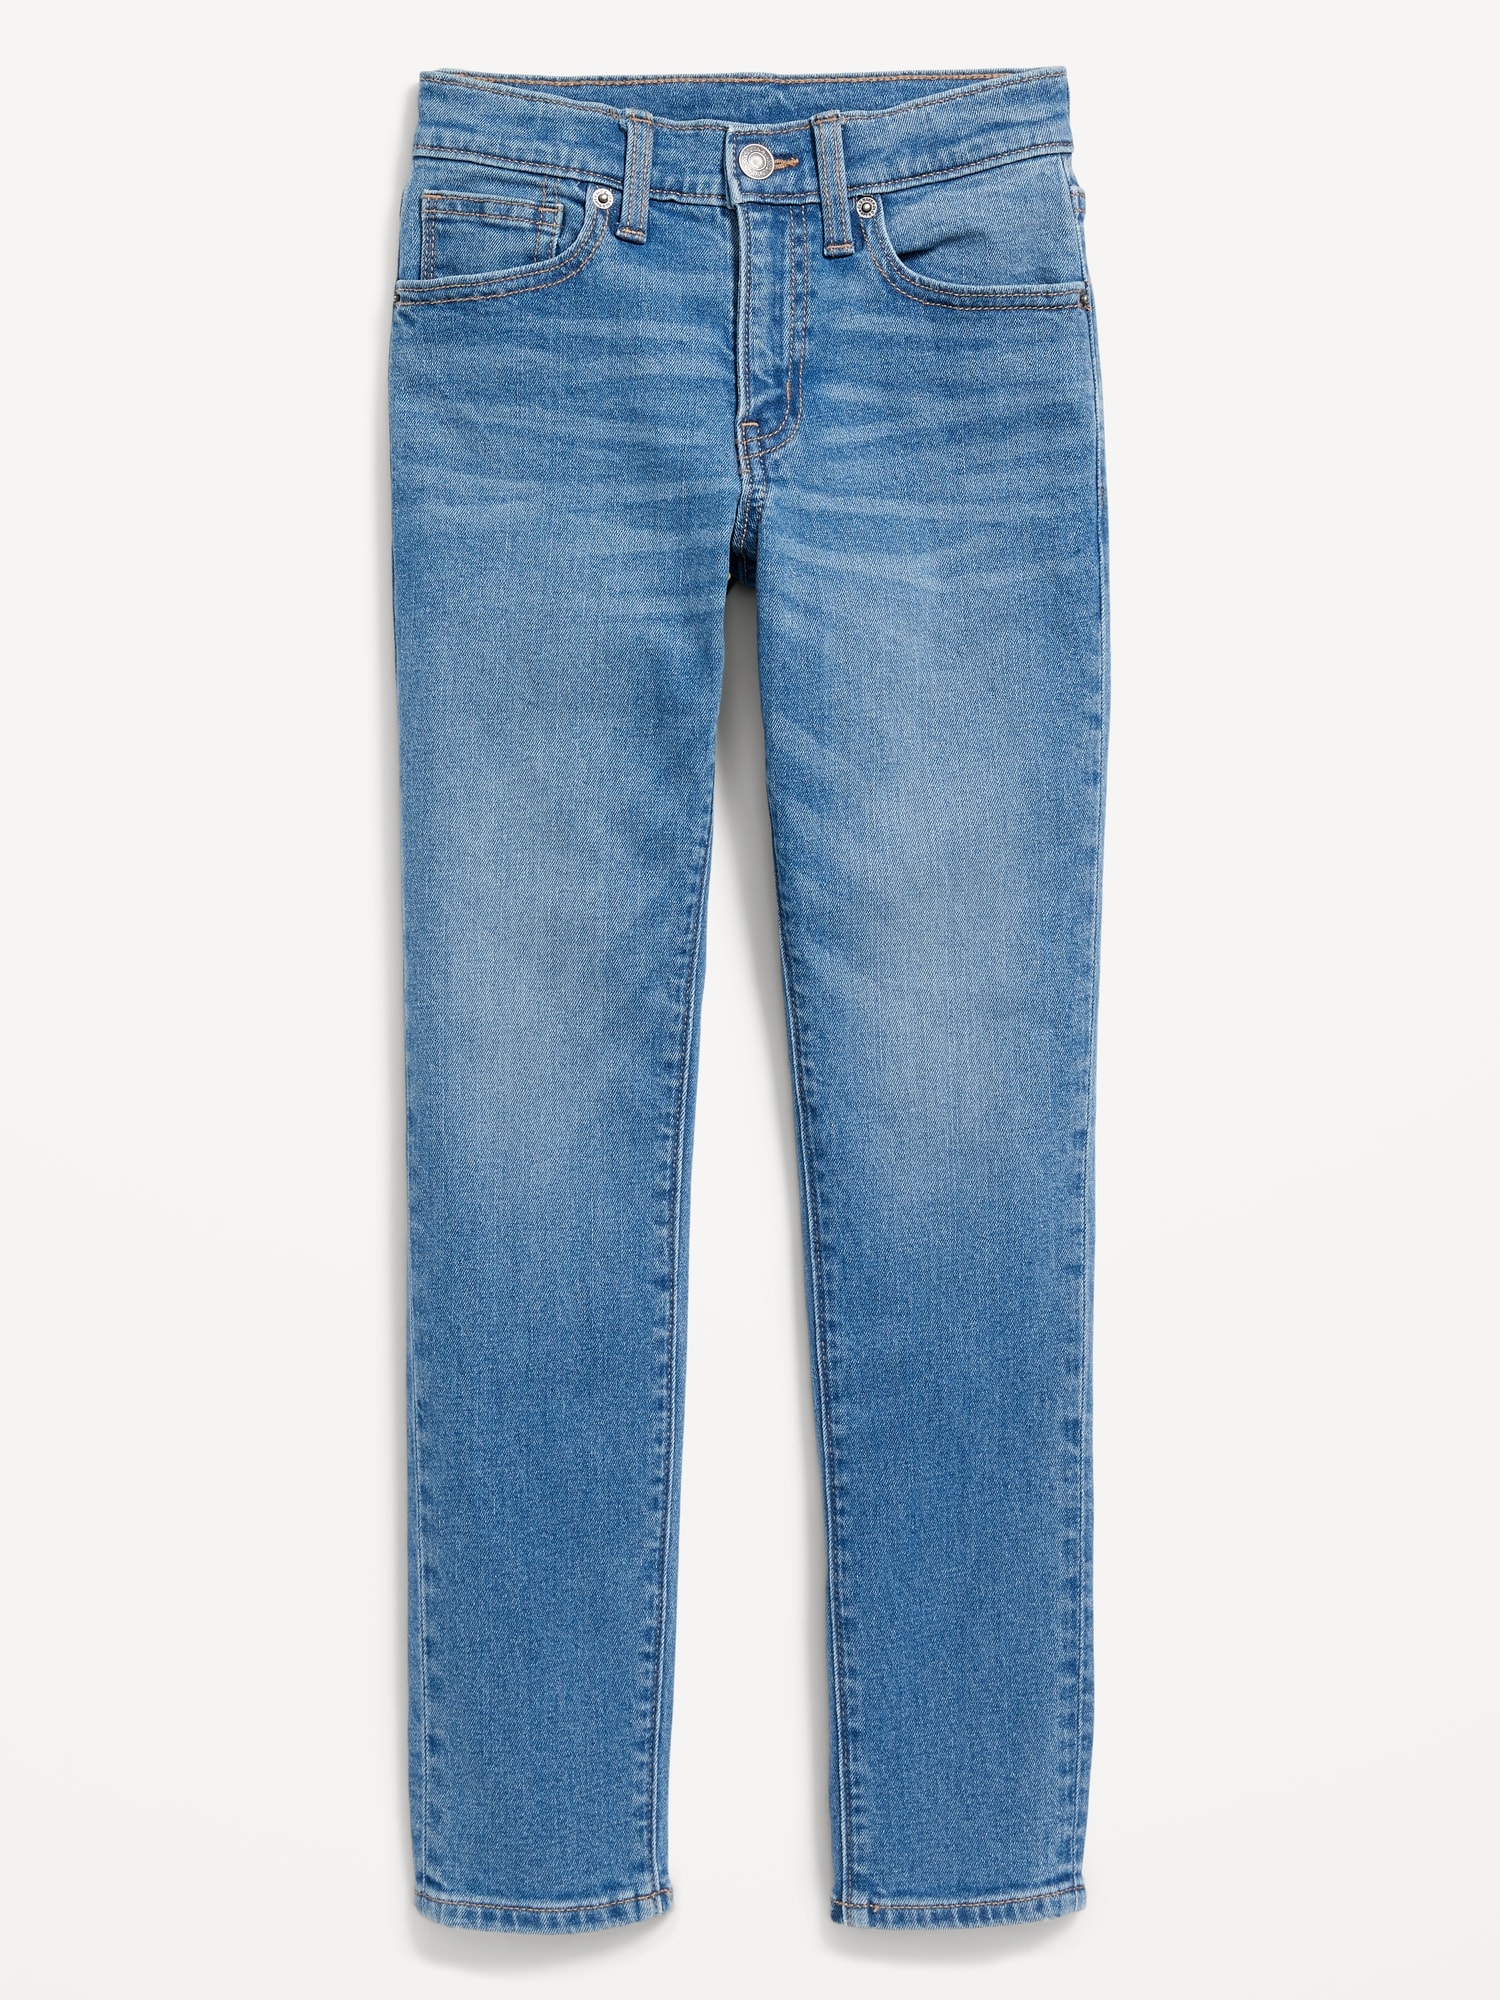 Original Taper Jeans for Boys Hot Deal